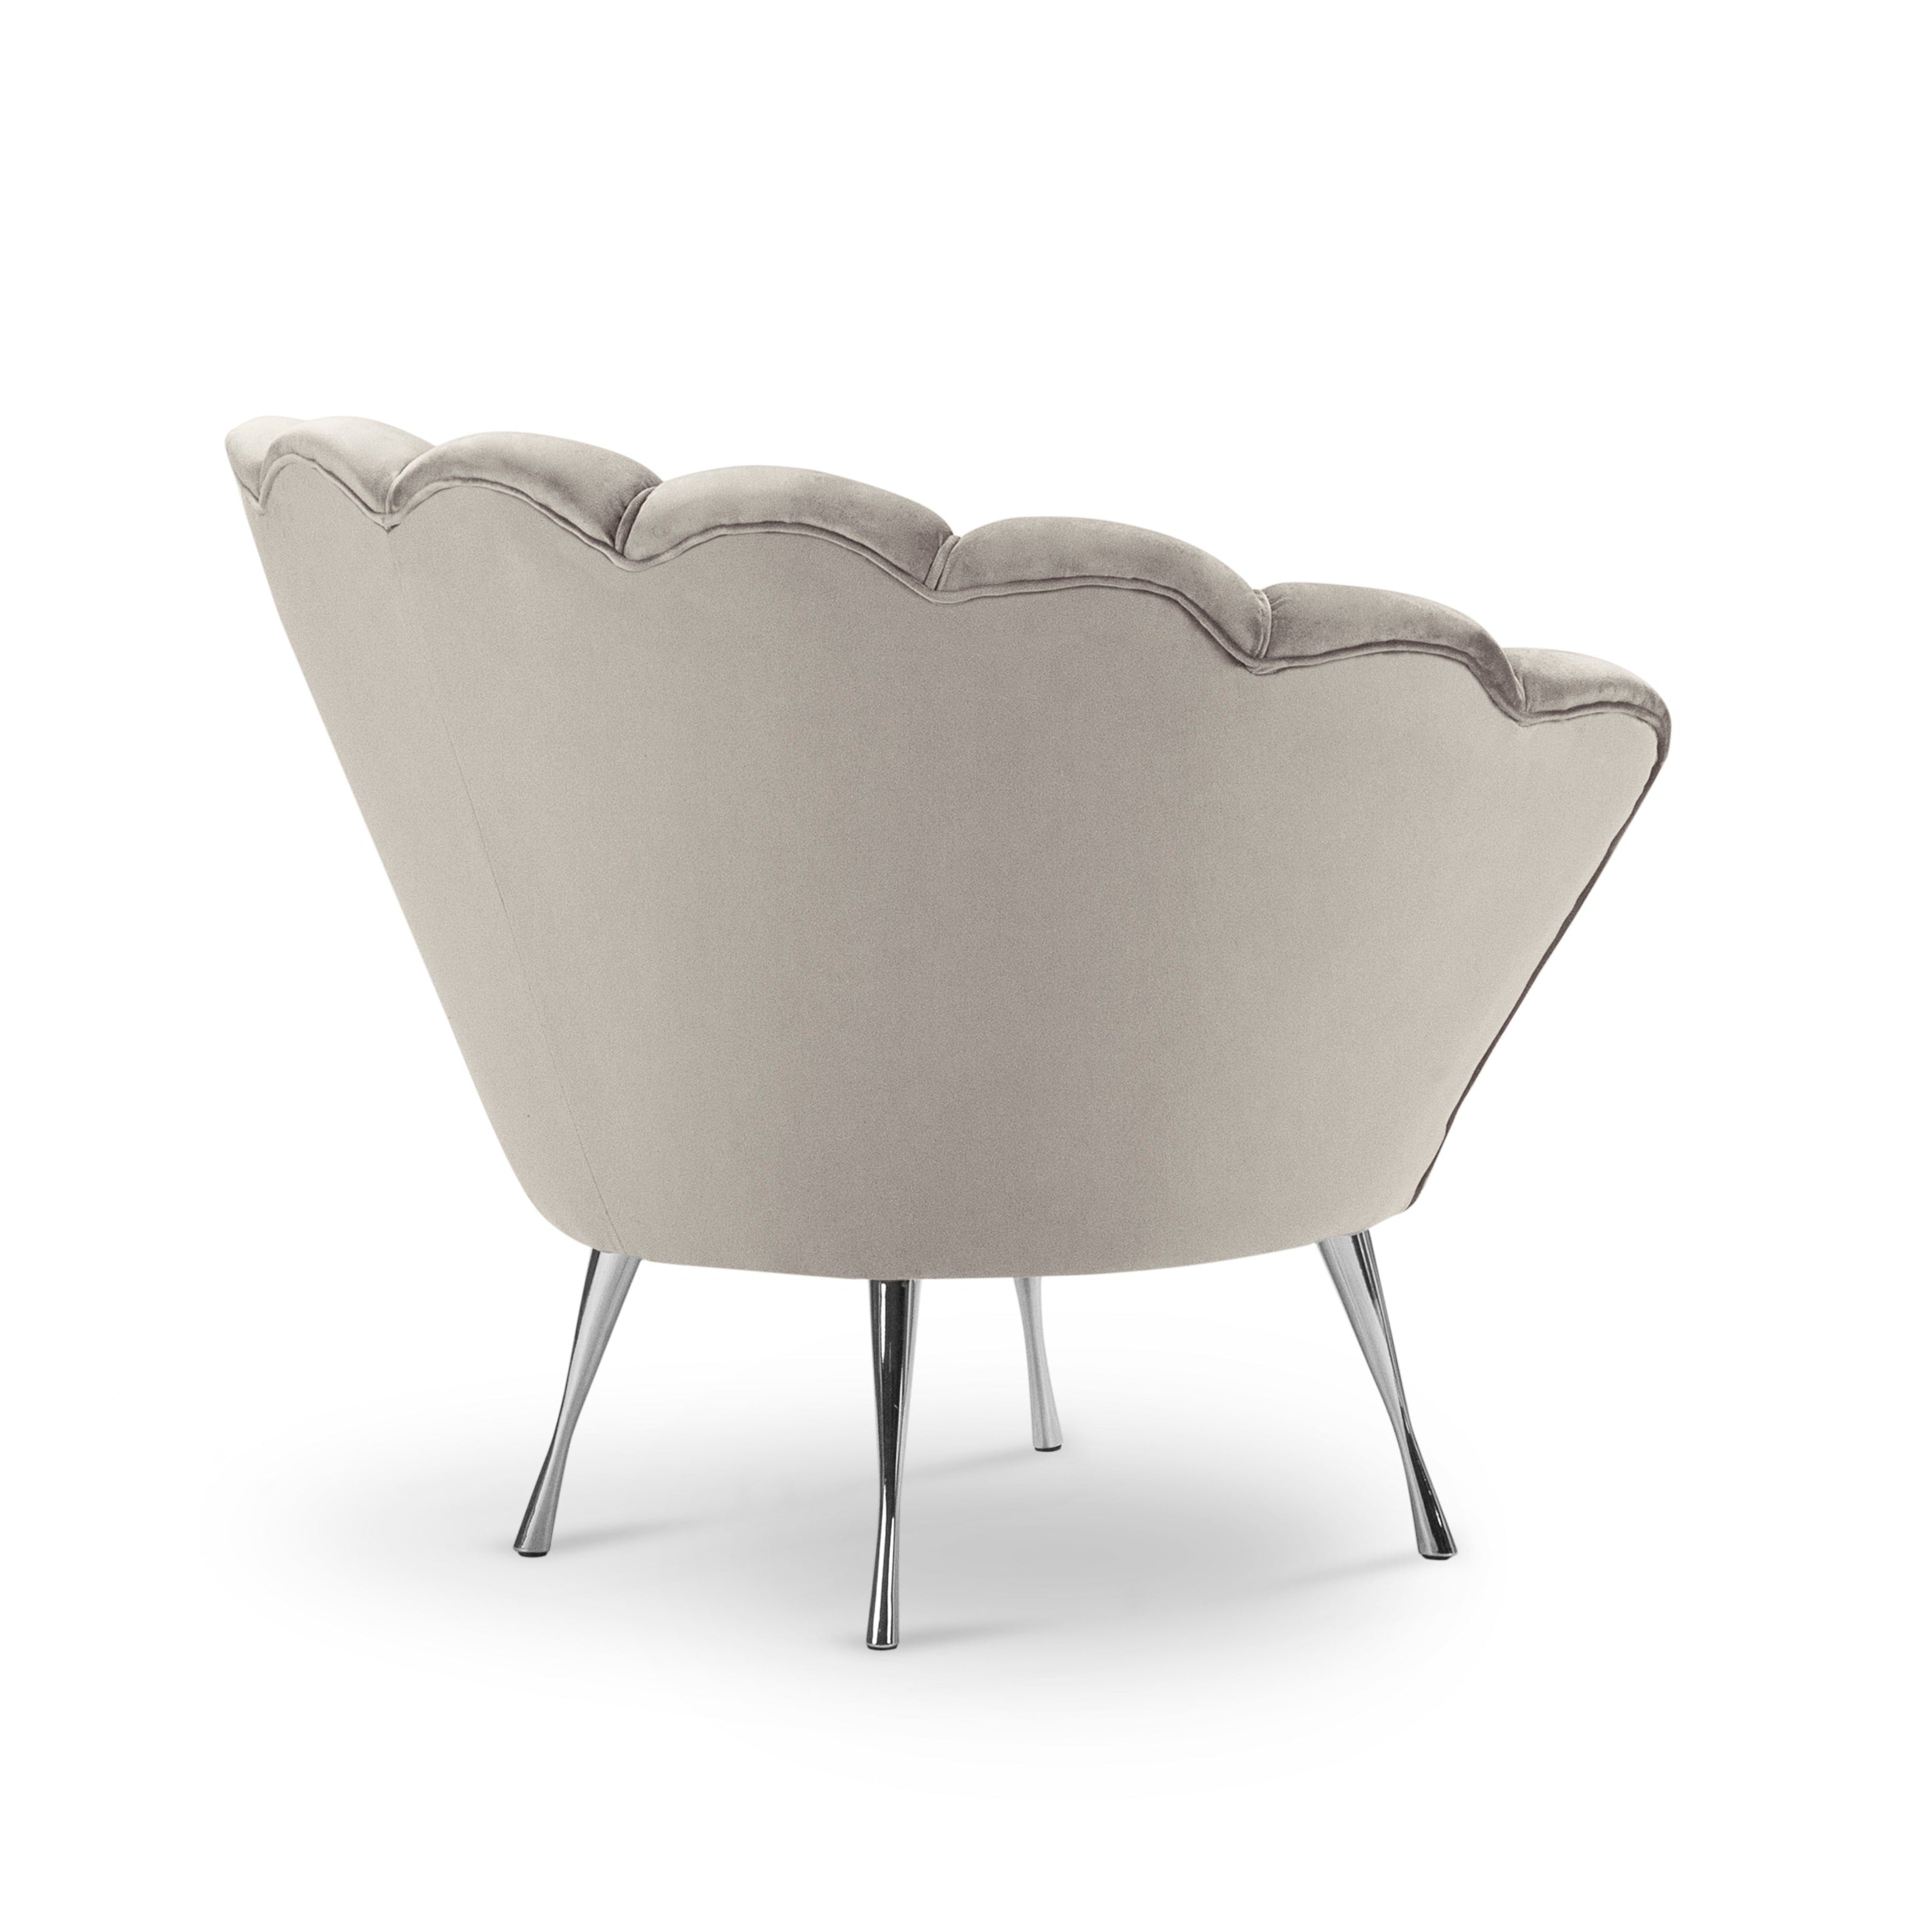 VARENNE velvet armchair in dark beige with silver base